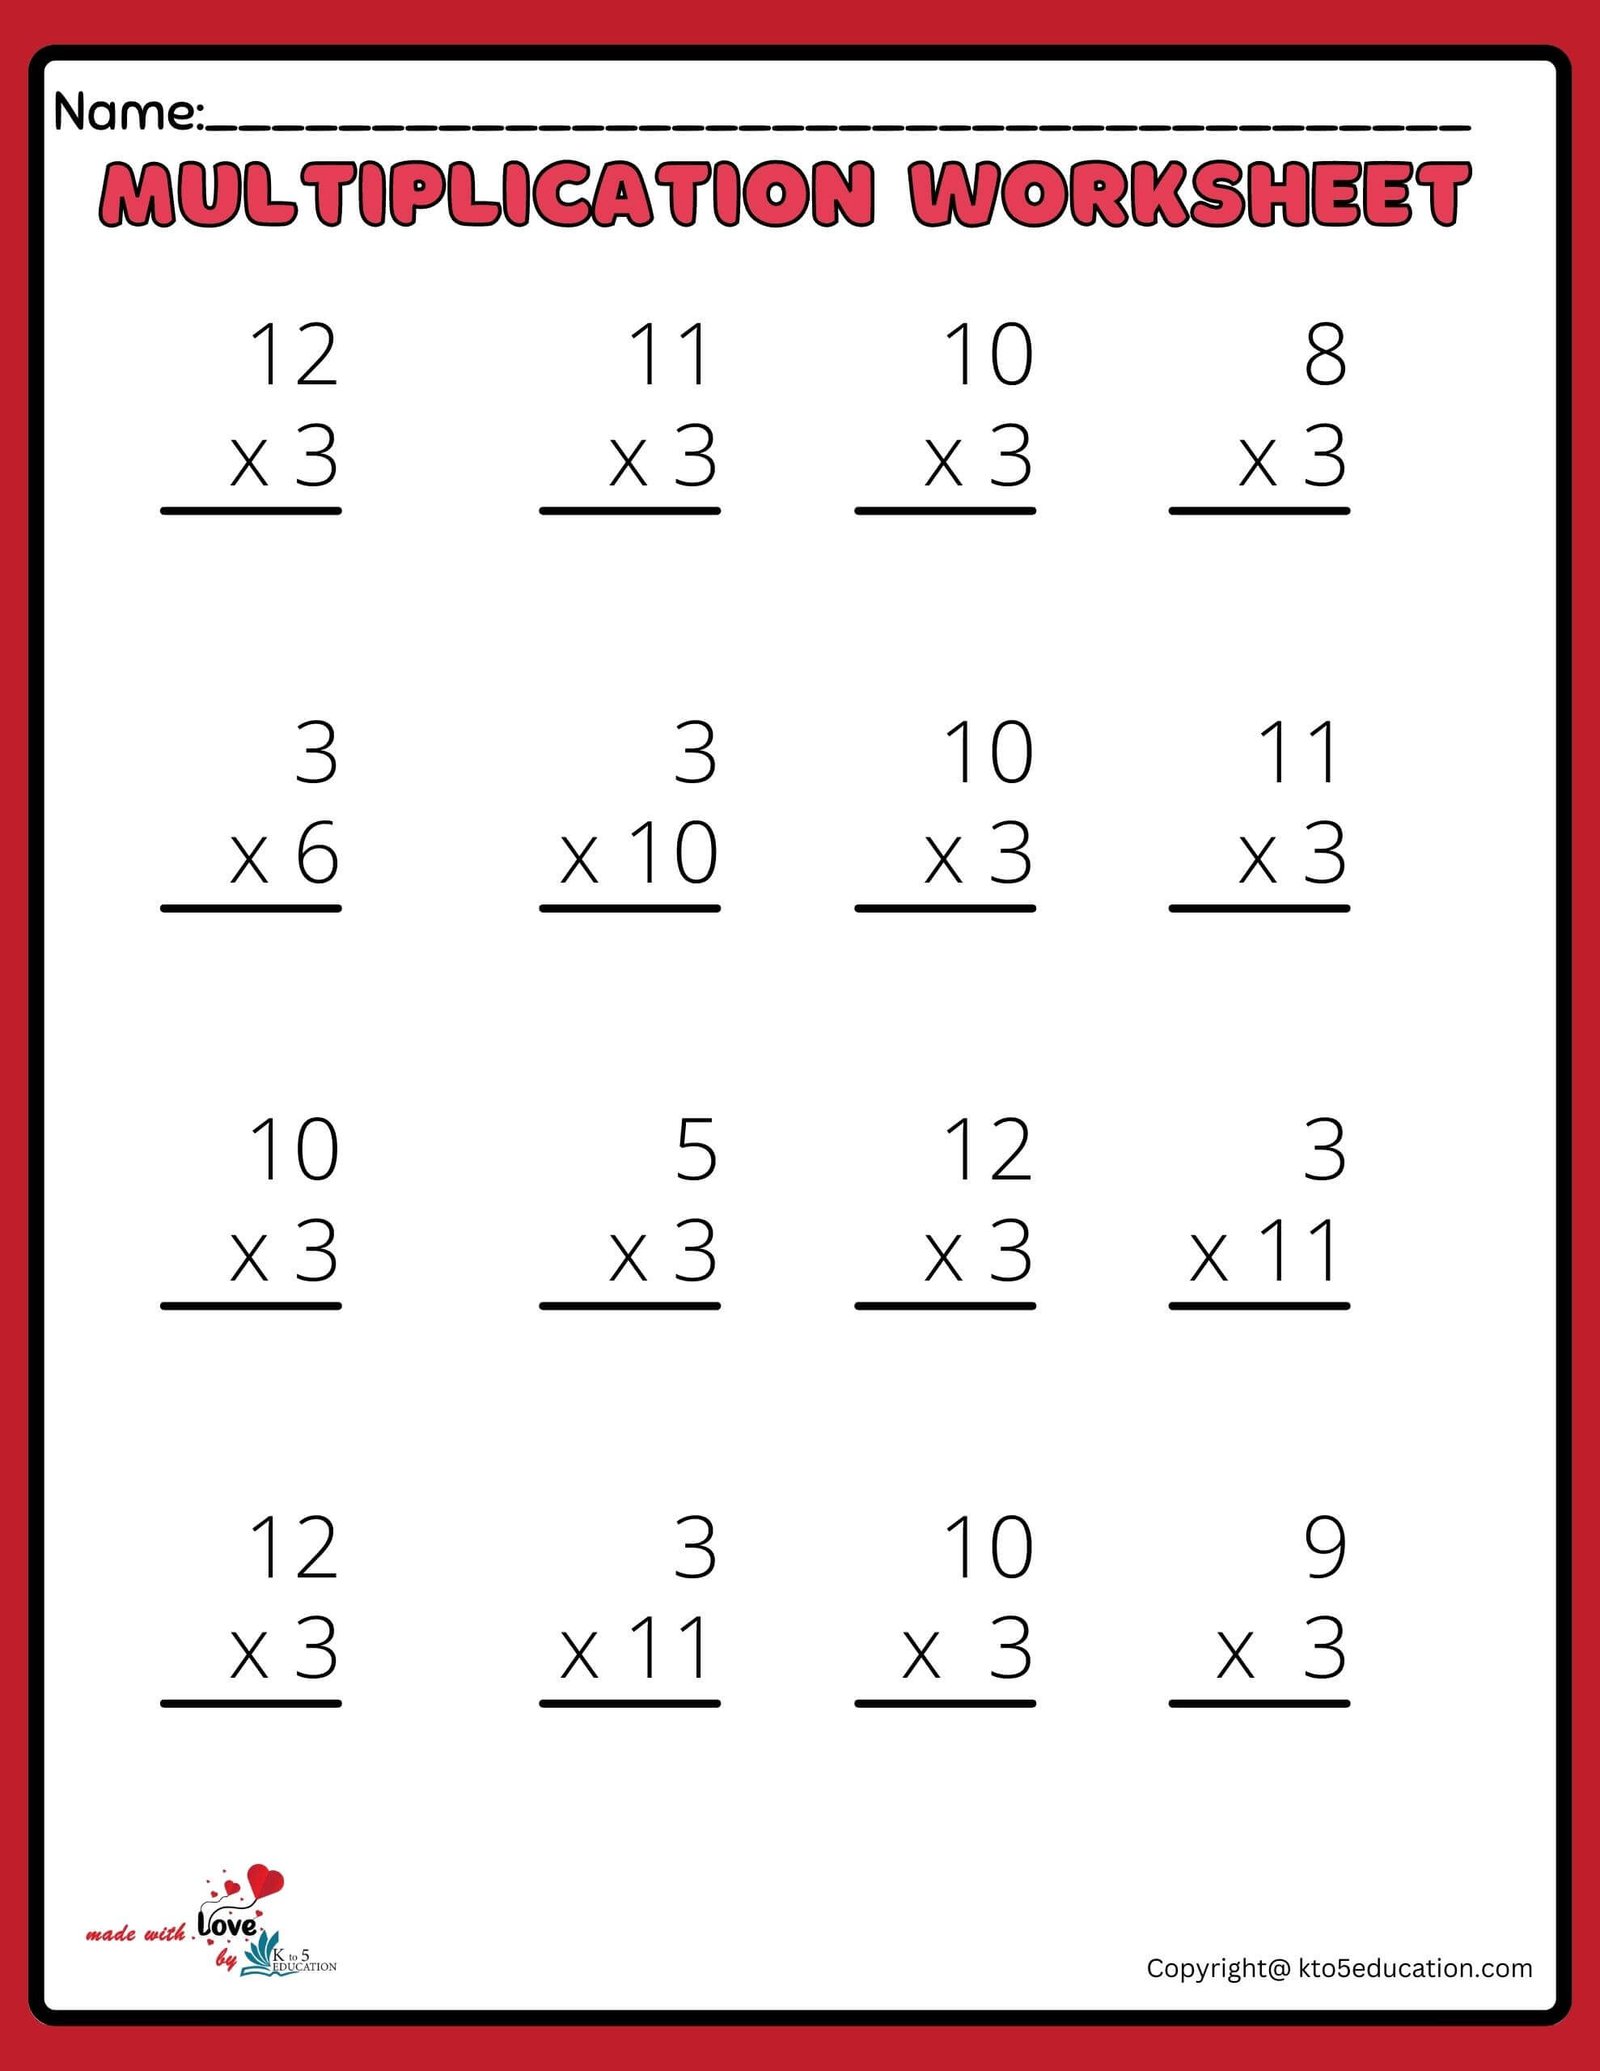 4x4 Multiplication Worksheet